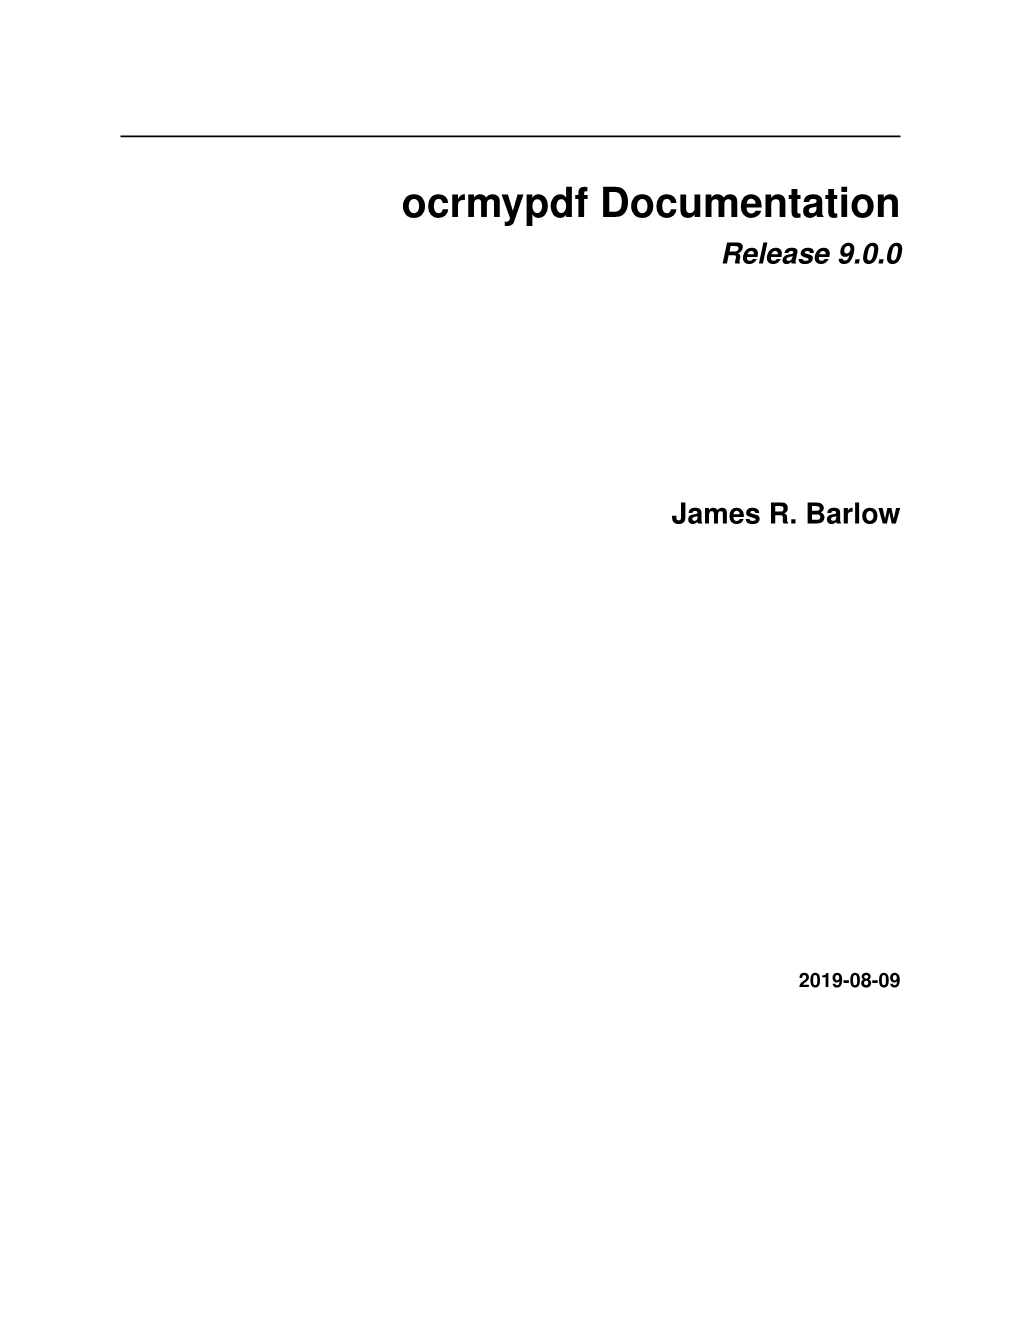 Ocrmypdf Documentation Release 9.0.0